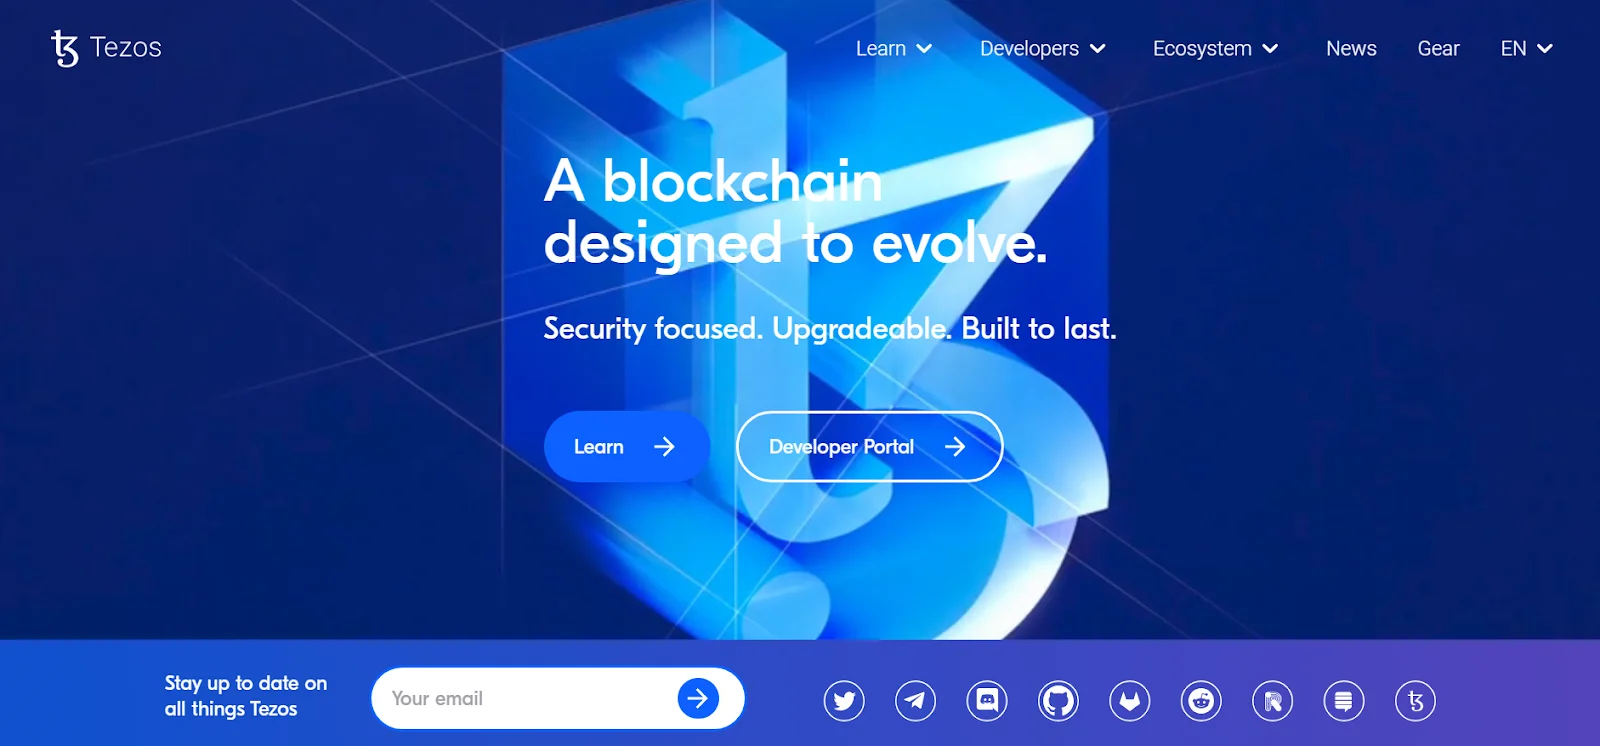 Landing page of the Tezos blockchain